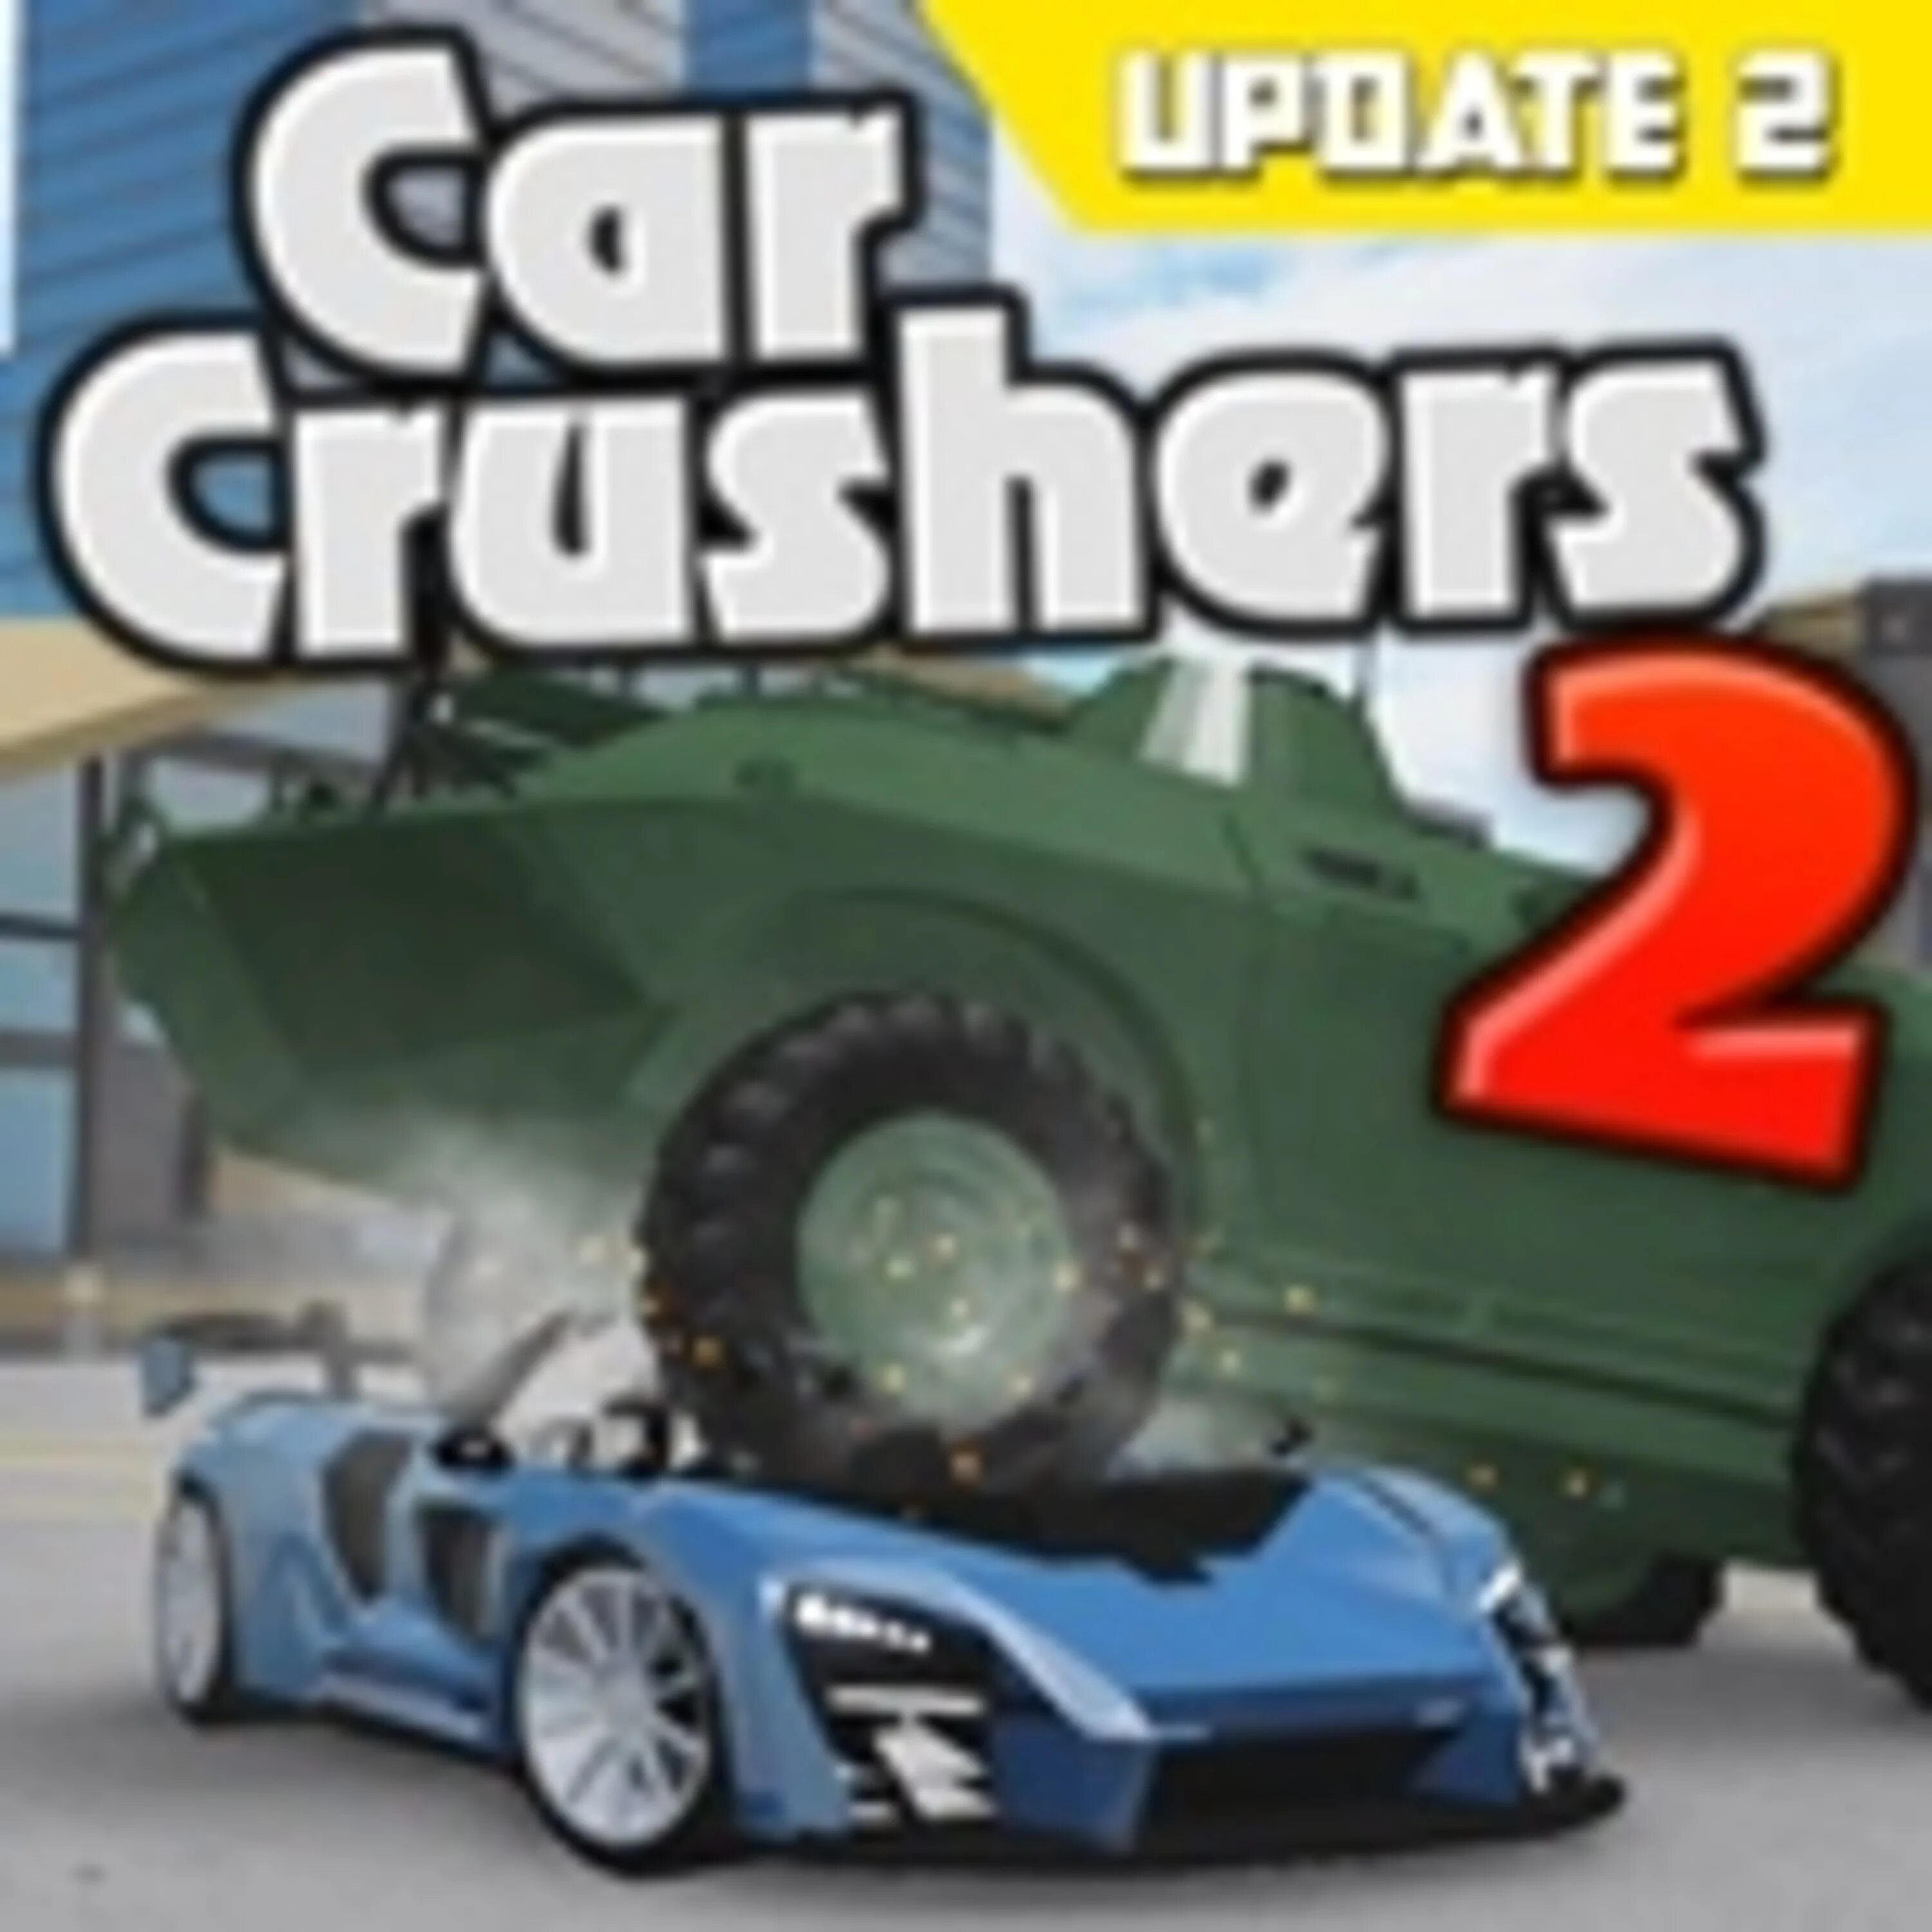 Кар крашер 2. Car crushers 2. РОБЛОКС кар крашер 2. Car Crashers 2 Roblox. Car crushers 2 update 42.